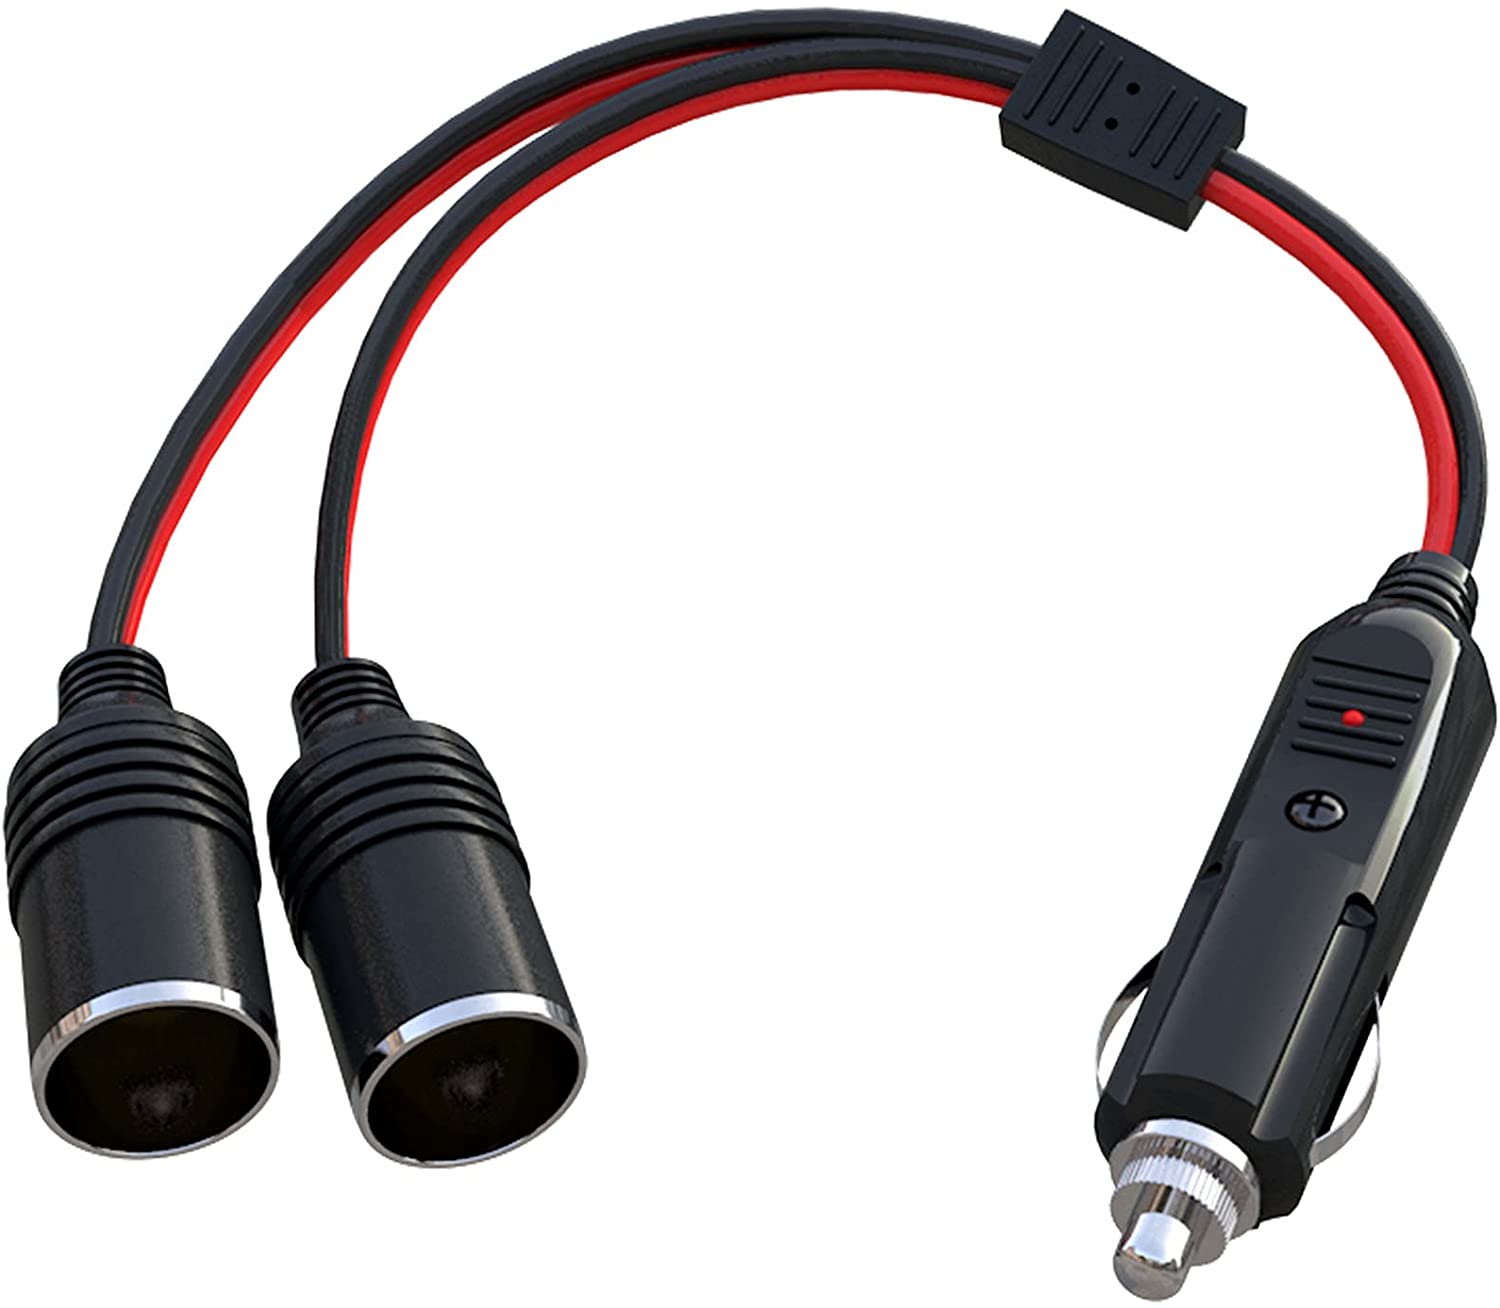 2-socket Splitter Car Cigarette Lighter Power Adapter 1 To 2/3-way